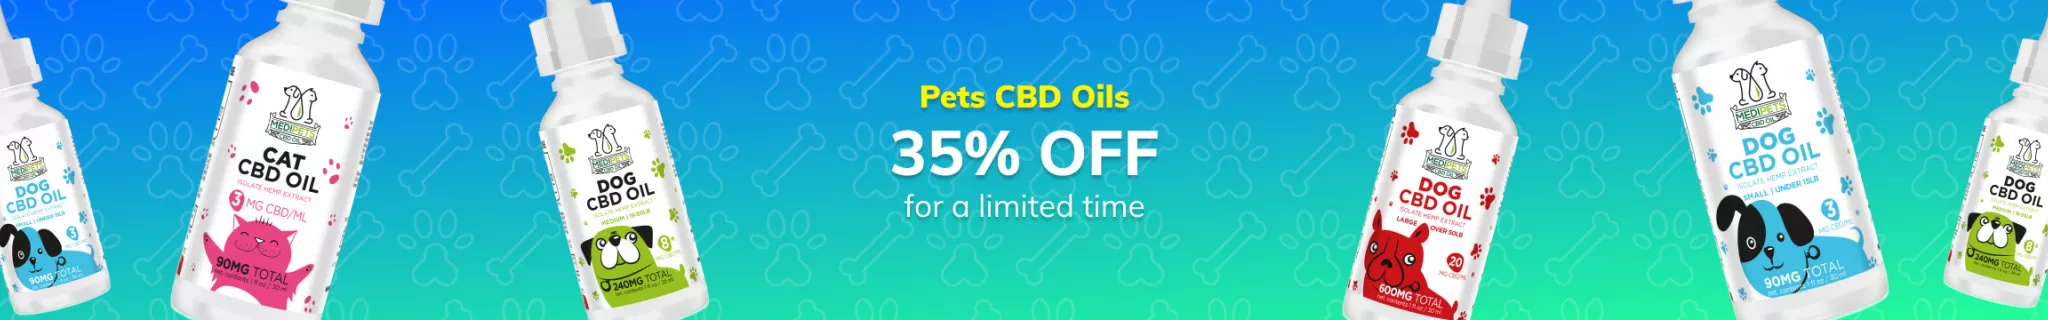 CBD Pet Oils 35% OFF